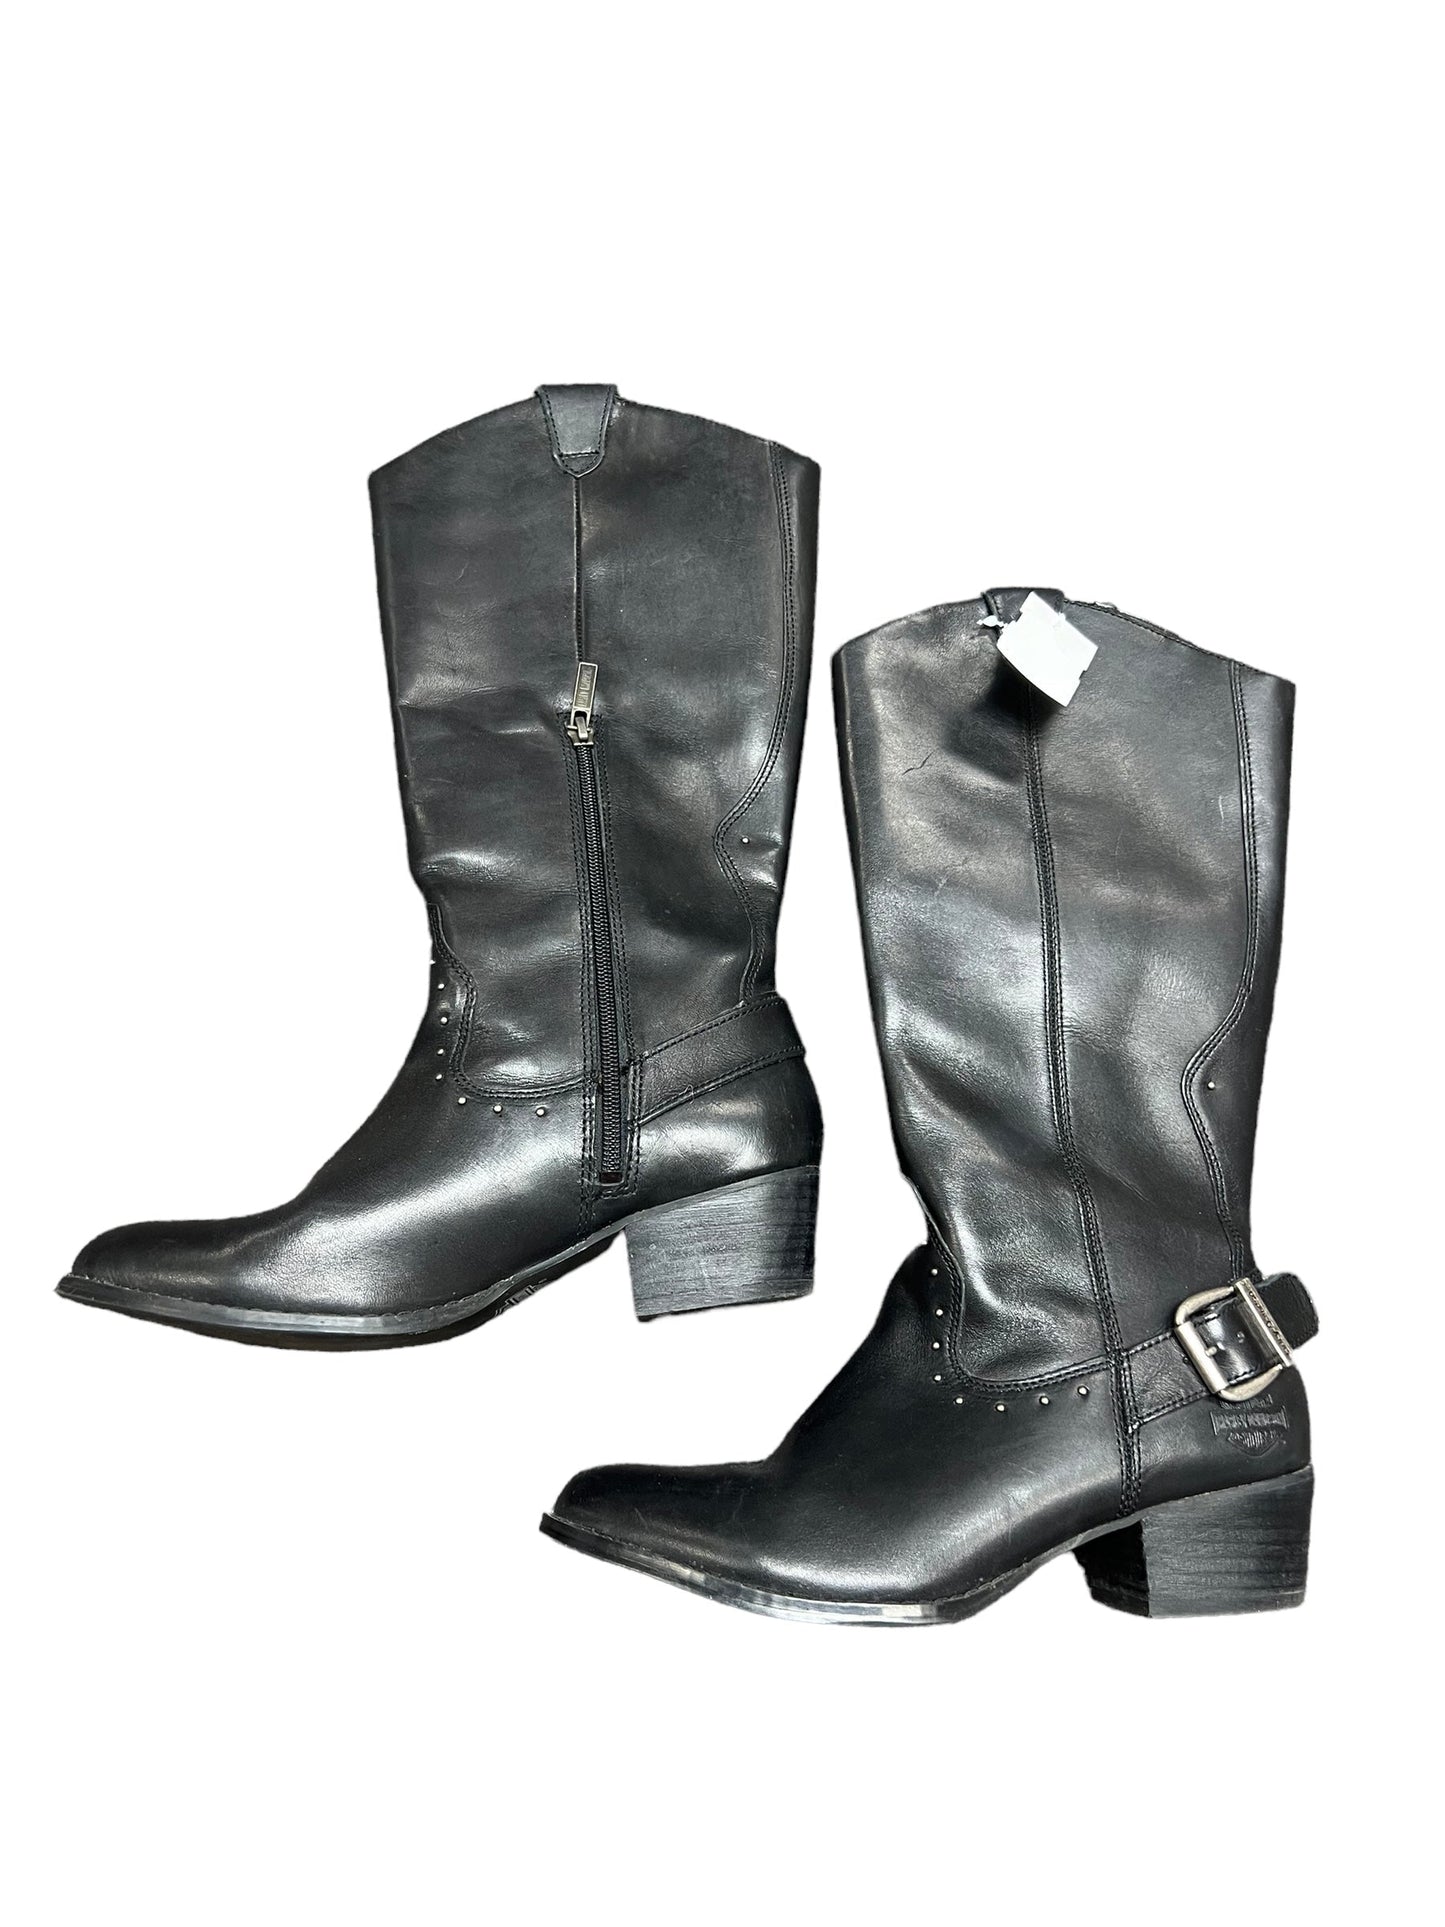 Black Boots Leather Harley Davidson, Size 7.5